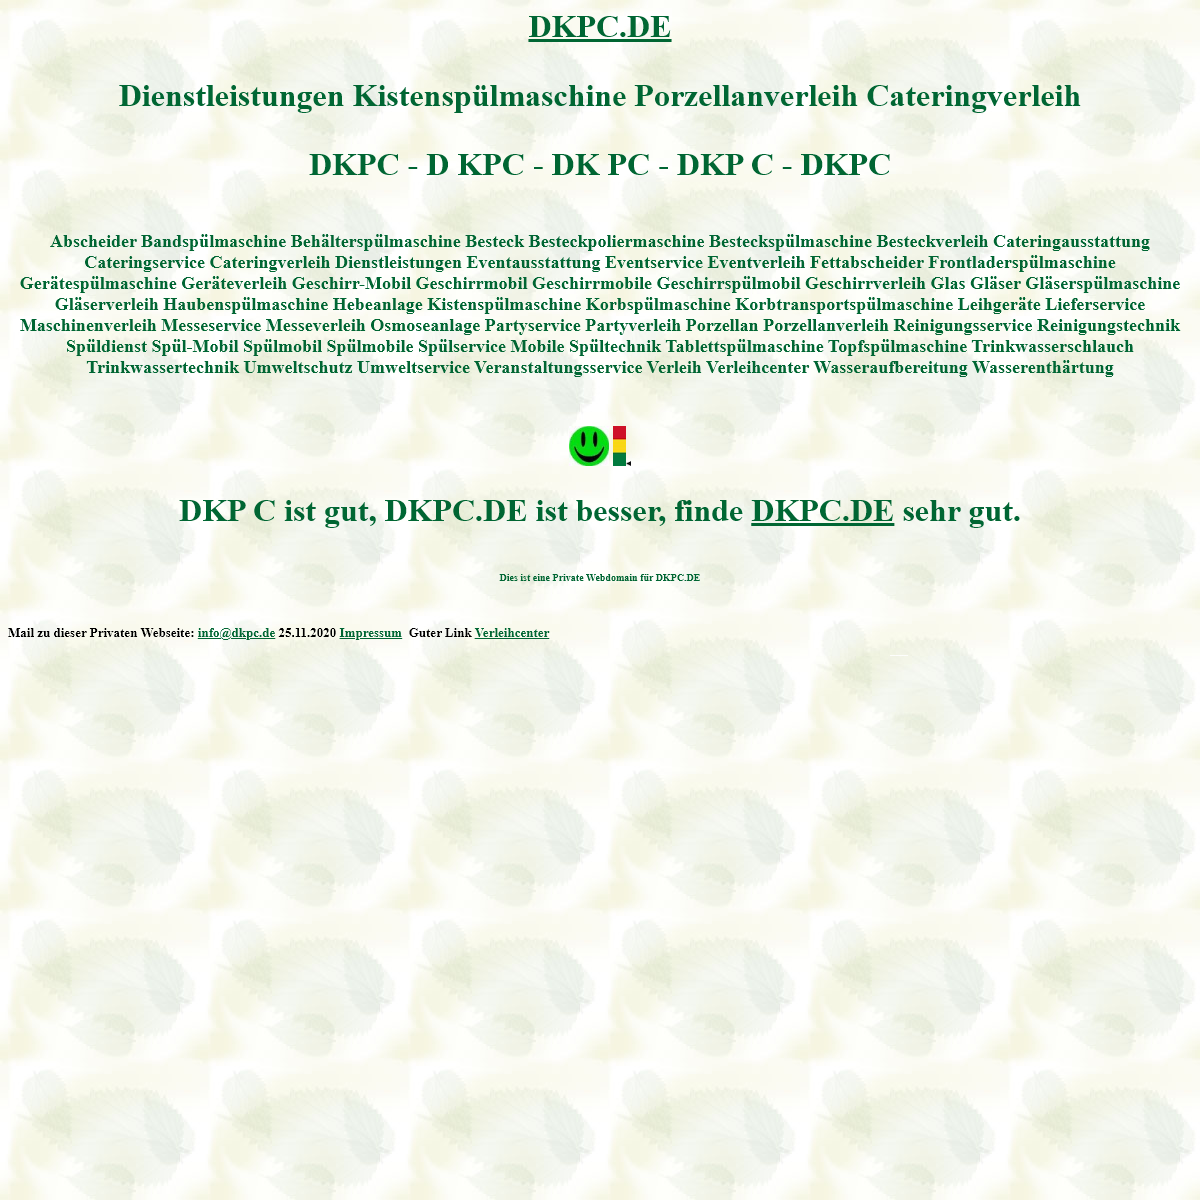 A complete backup of dkpc.de